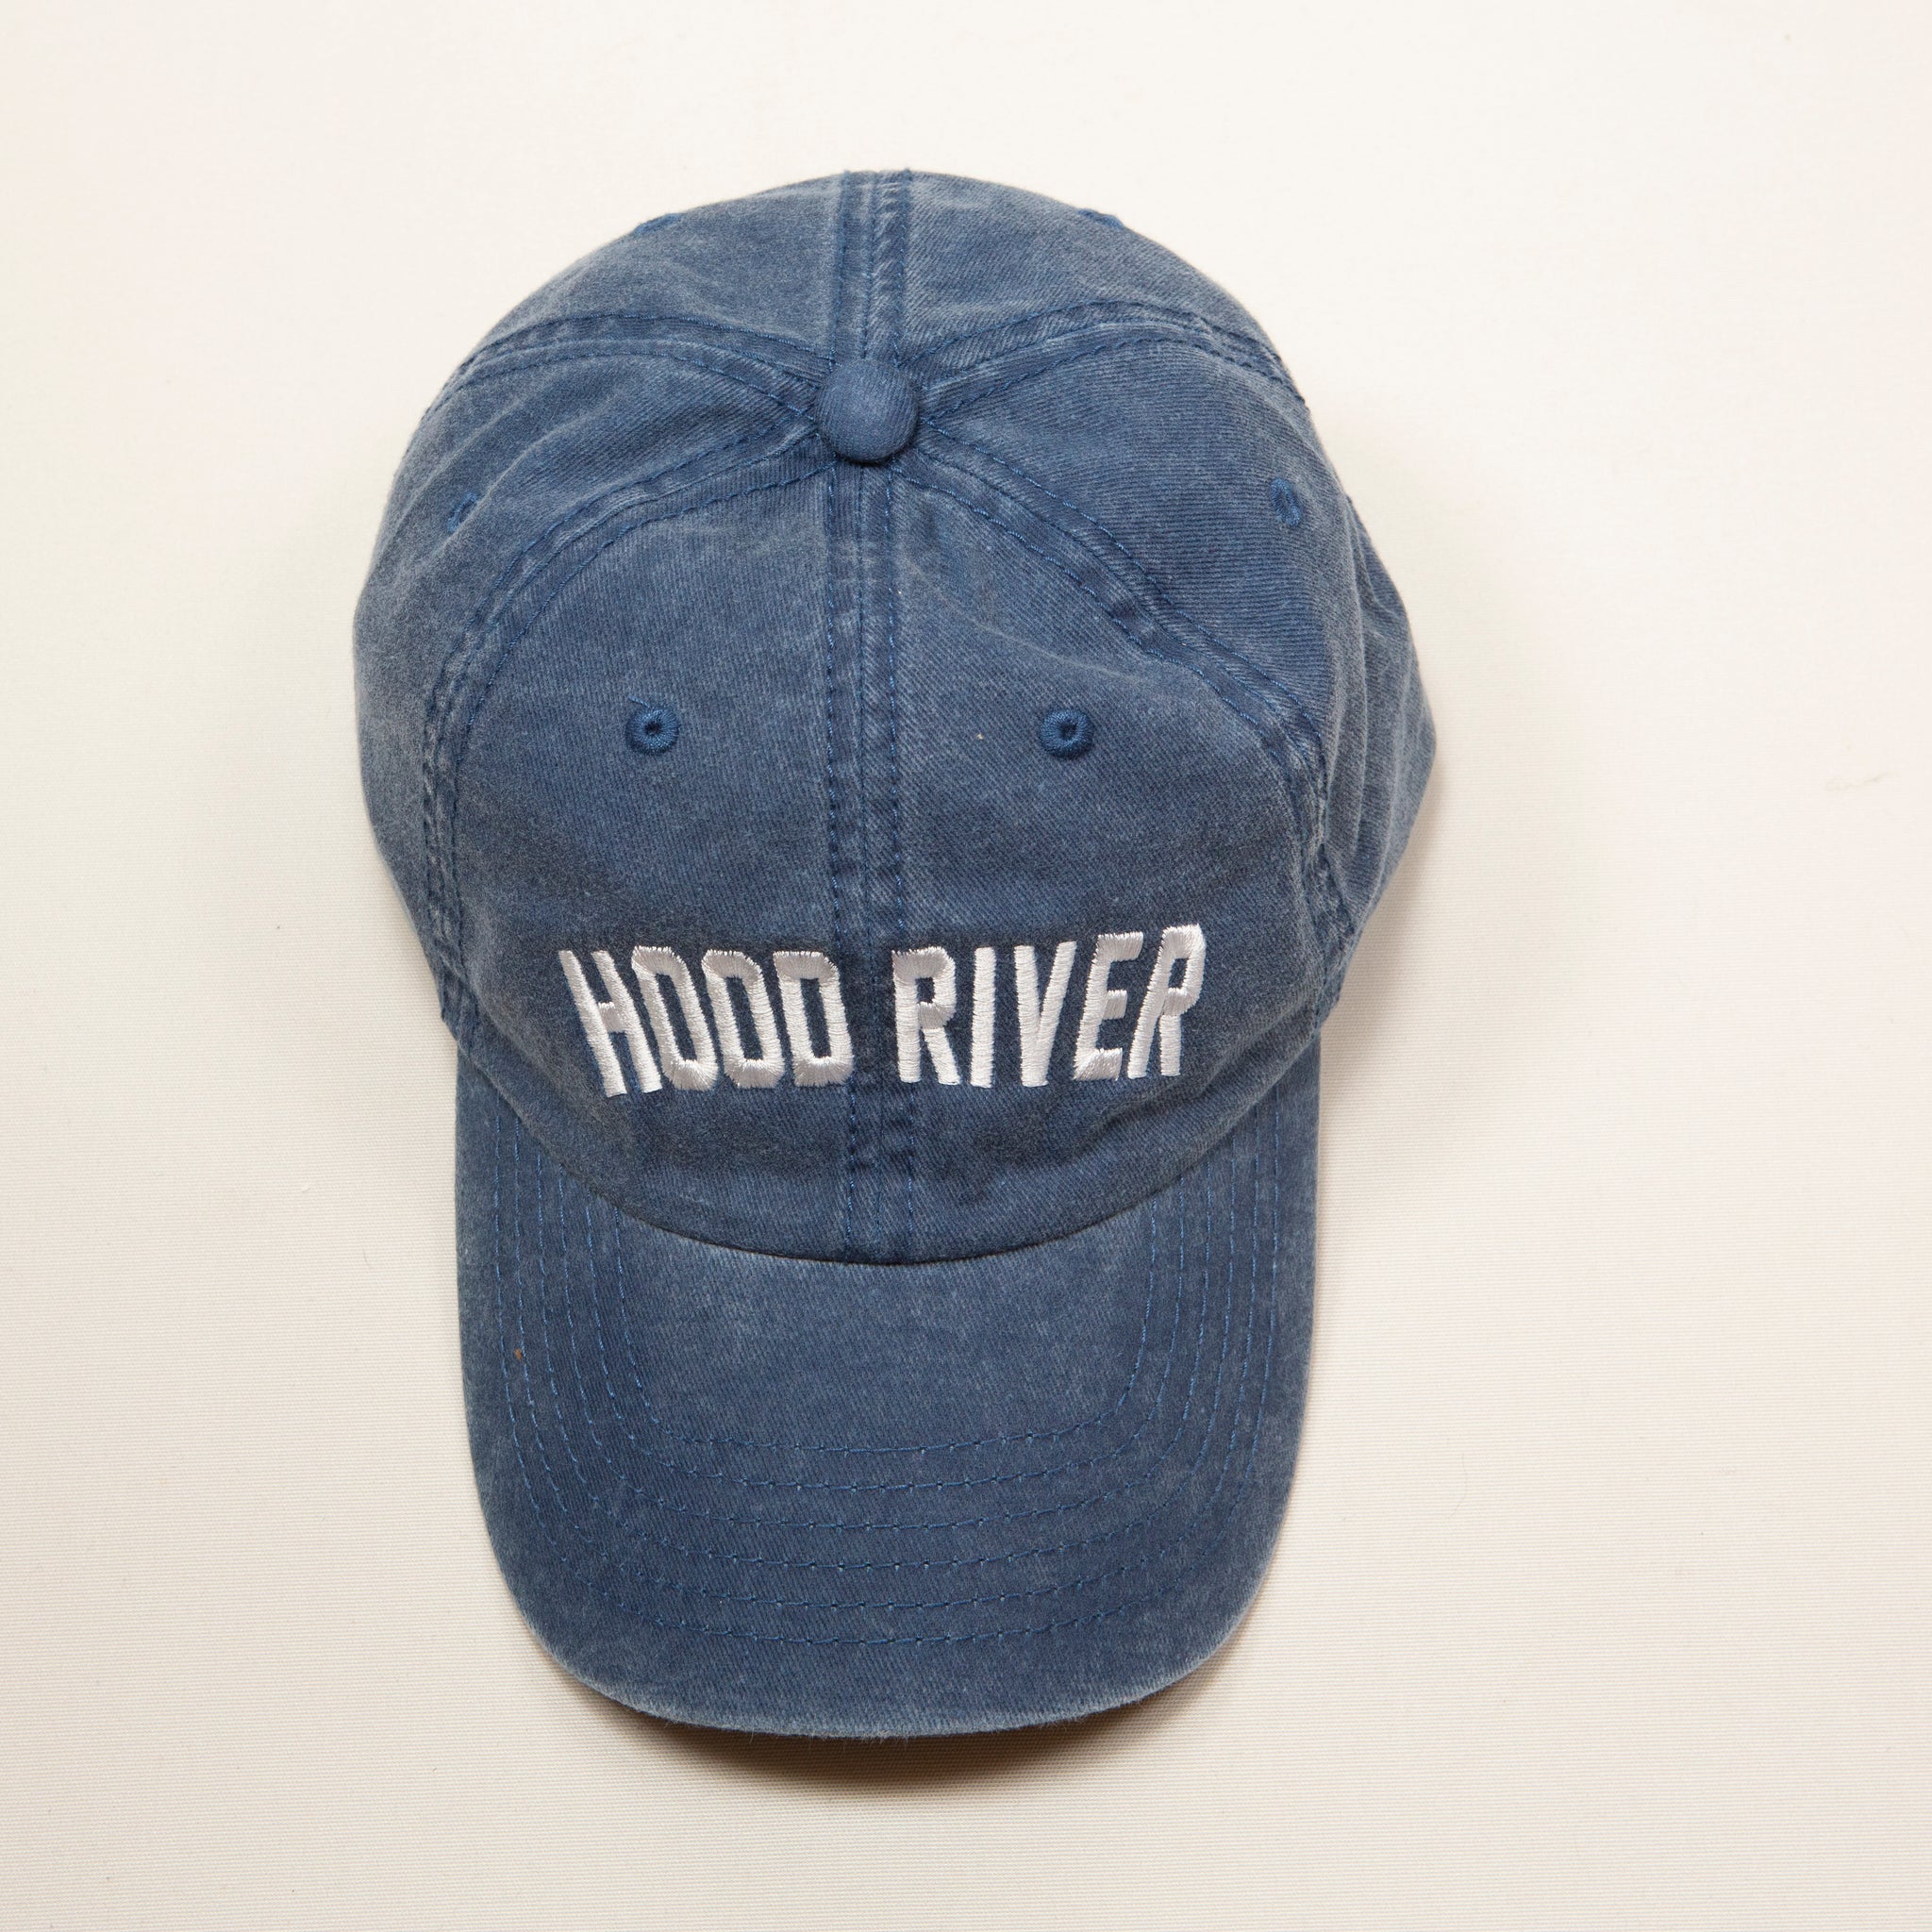 Cotton Baseball Cap with Hood River Logo